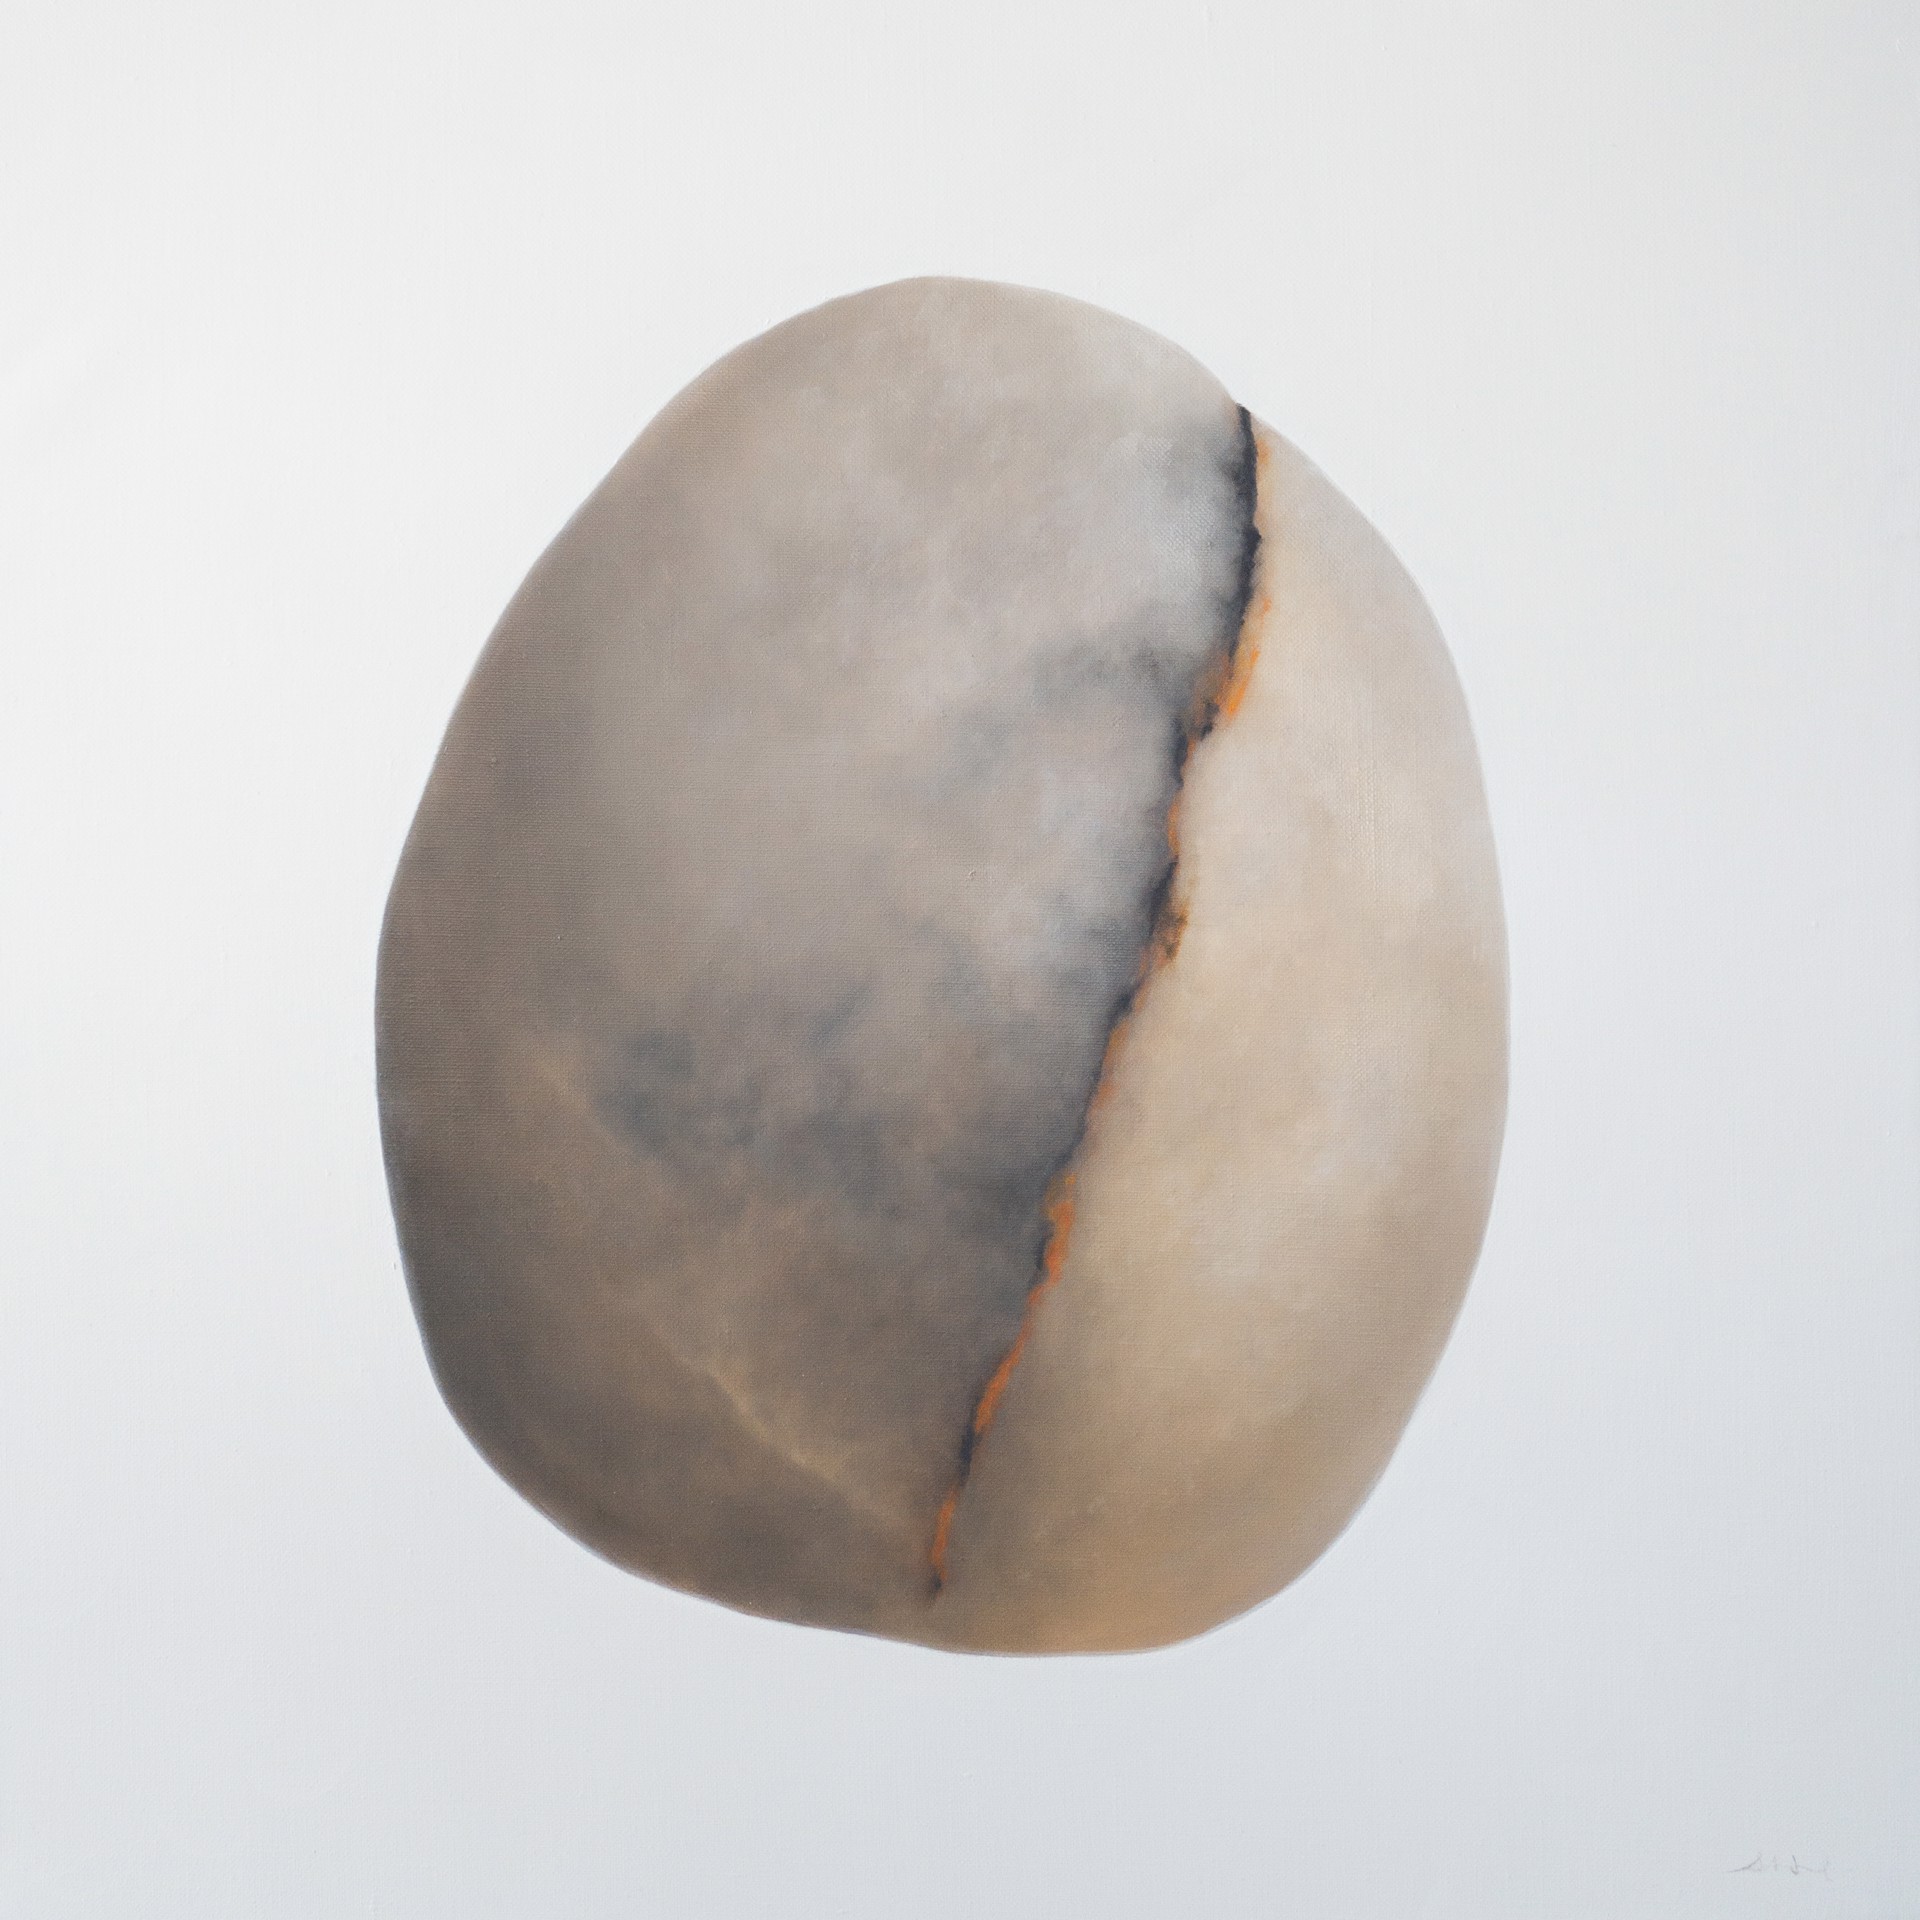 Amber Cracked Stone by Sarah Verardo